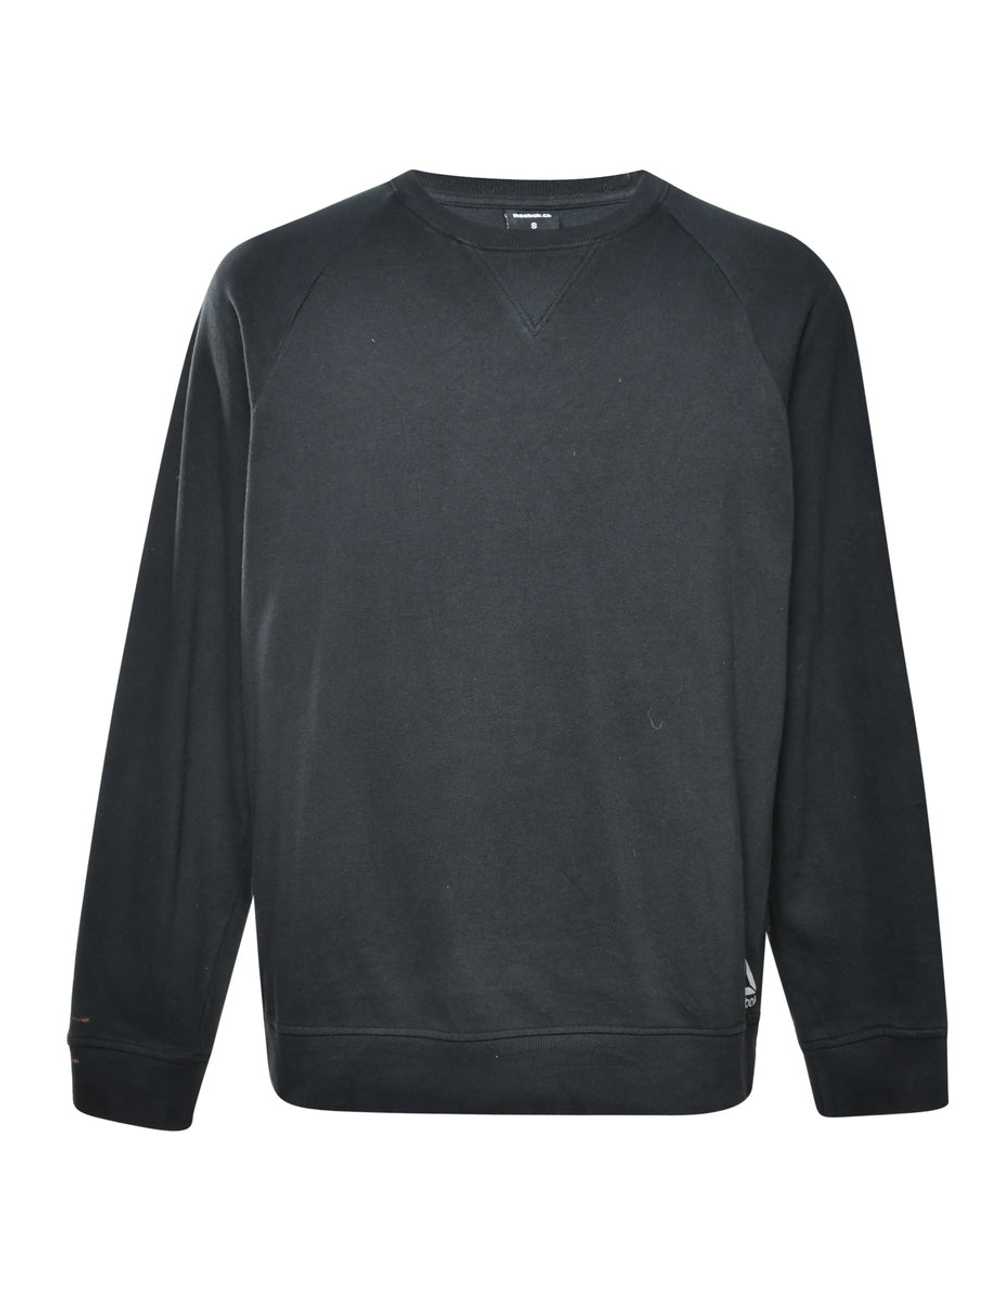 Reebok Plain Sweatshirt - S - image 1